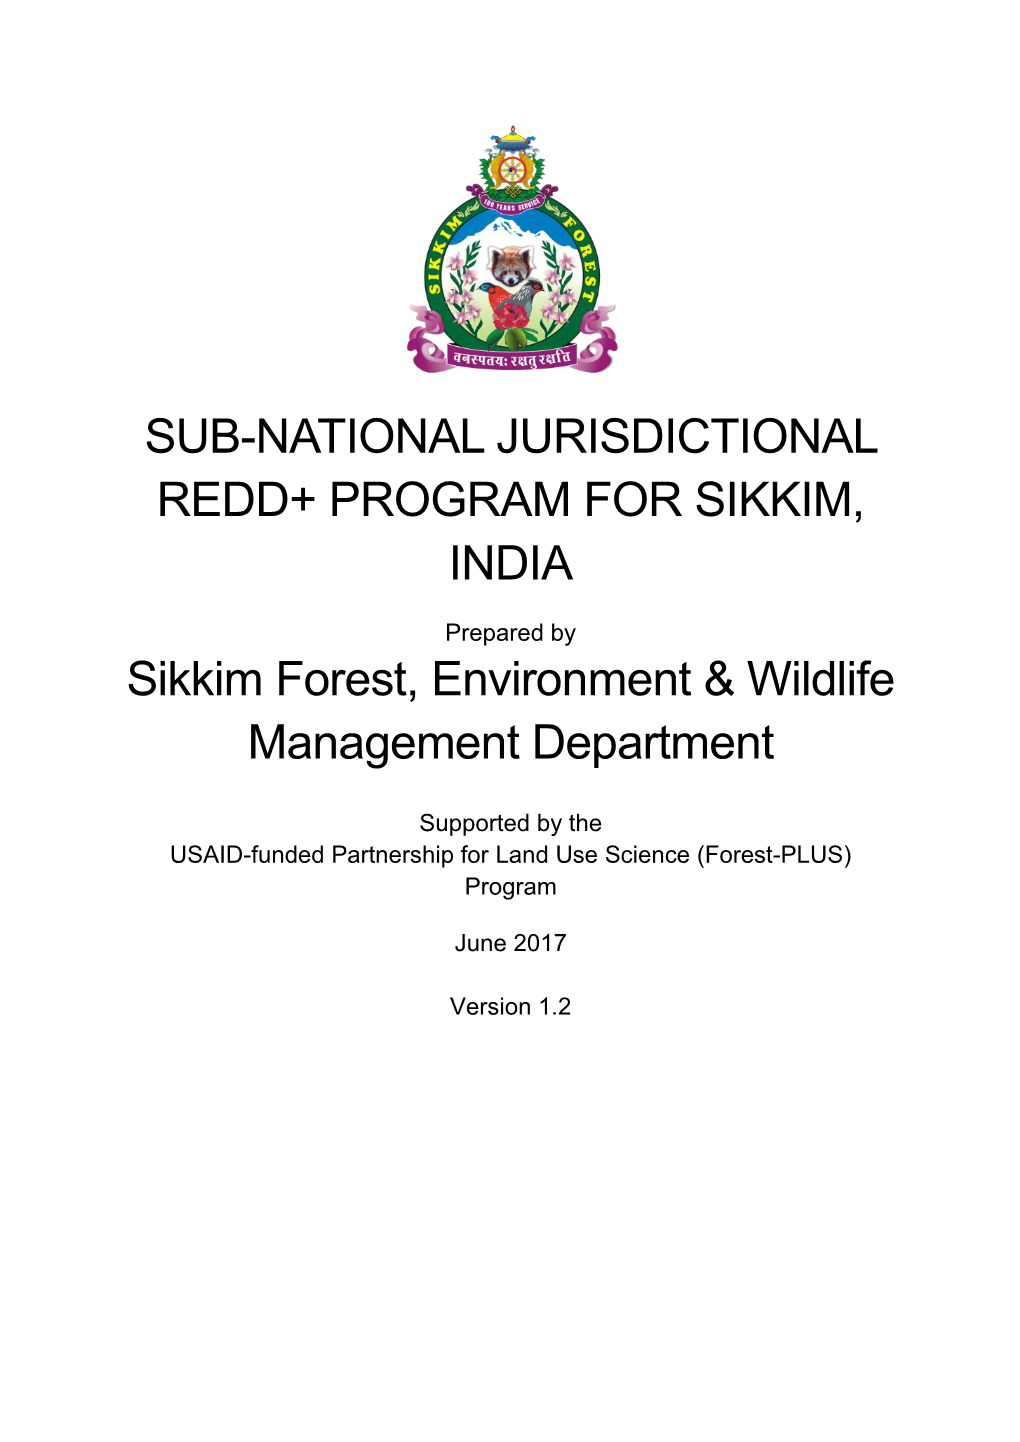 Sub-National Jurisdictional Redd+ Program for Sikkim, India